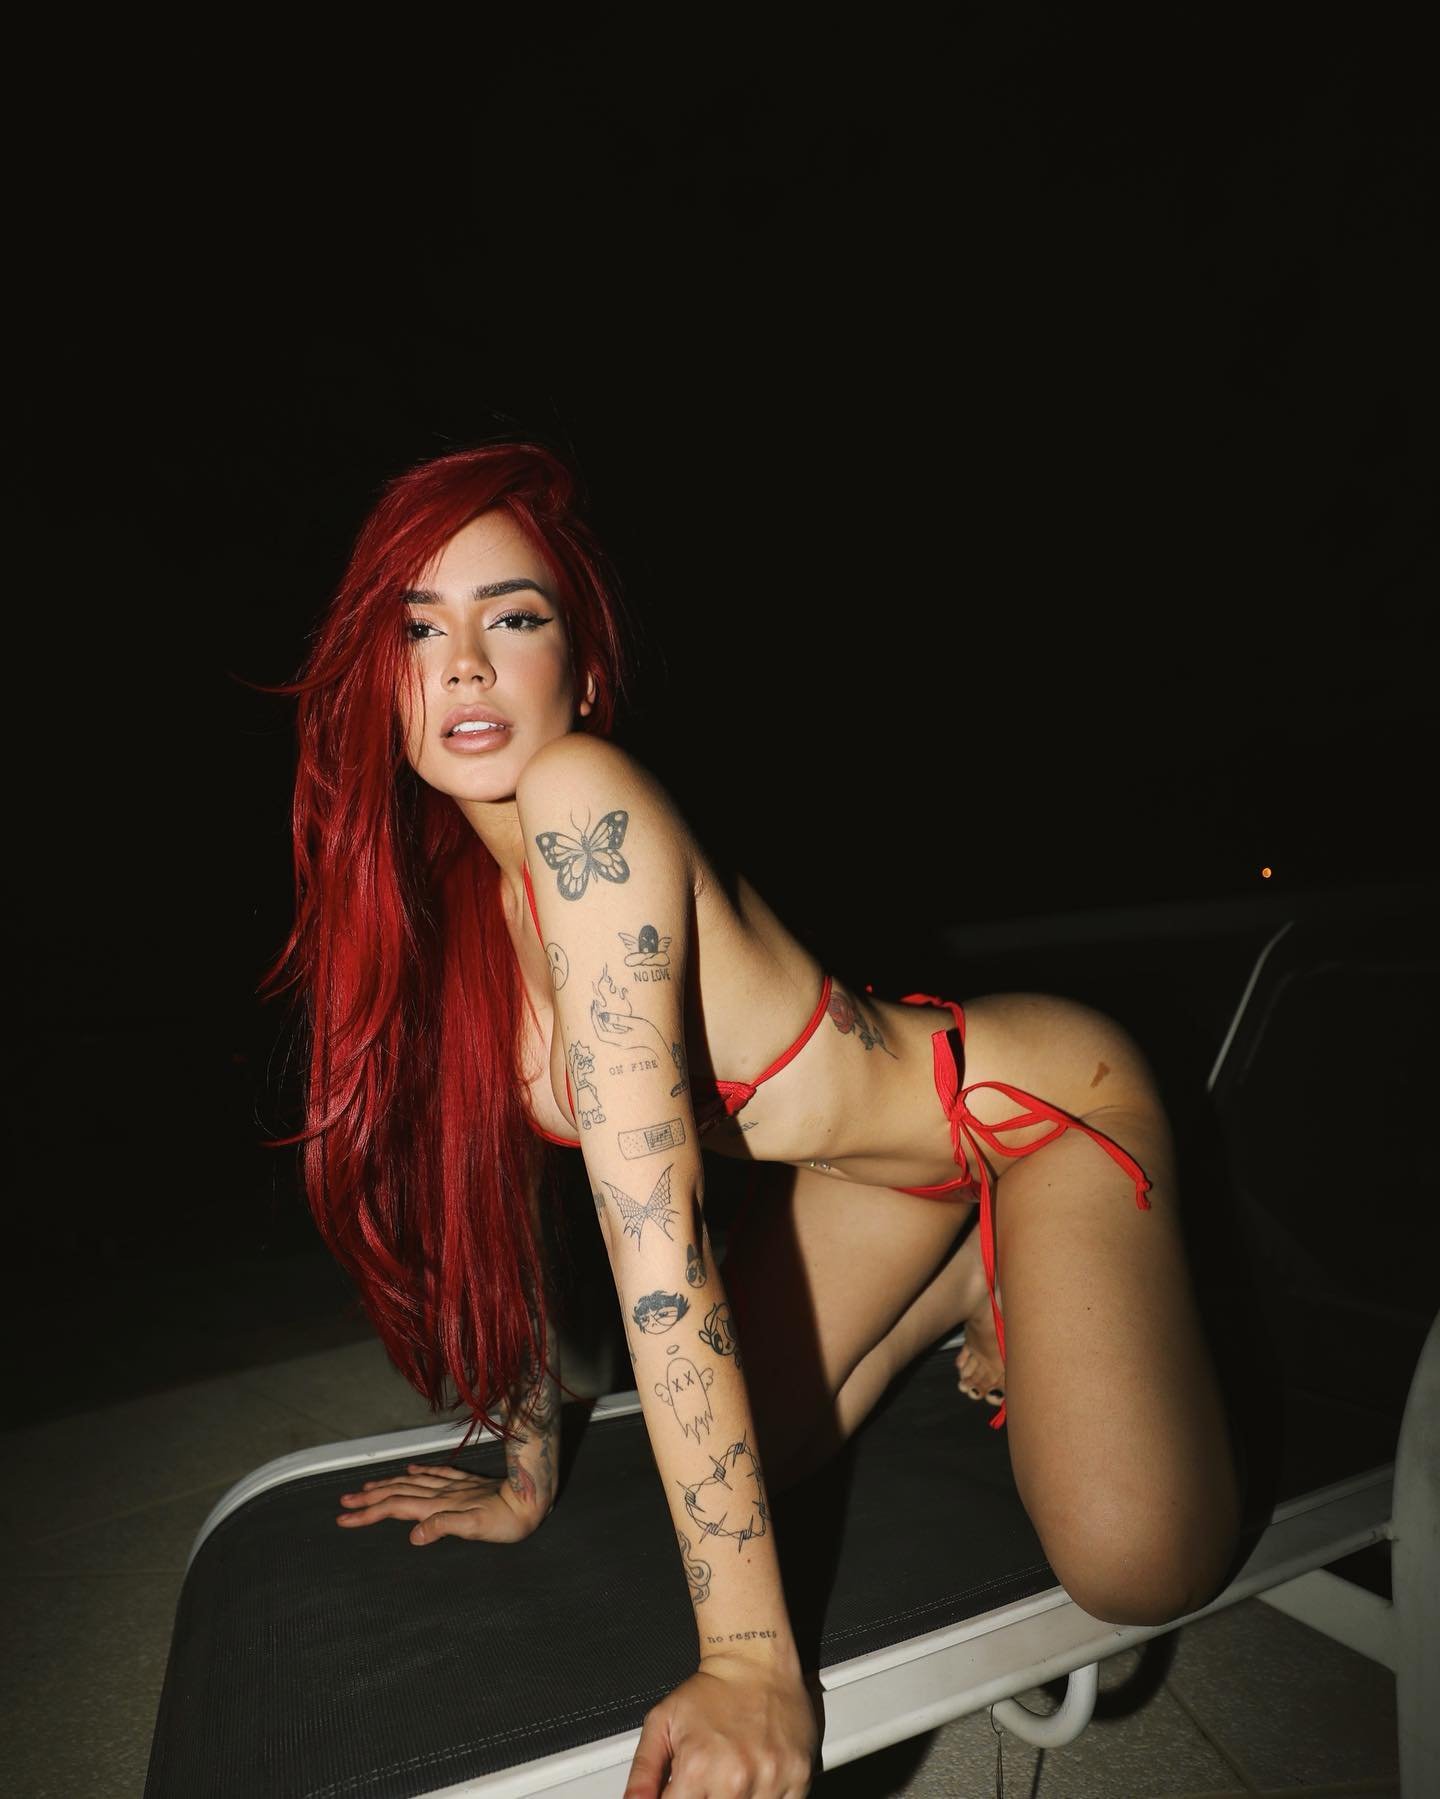 Lara Silva em foto noturna de biquini vermelho